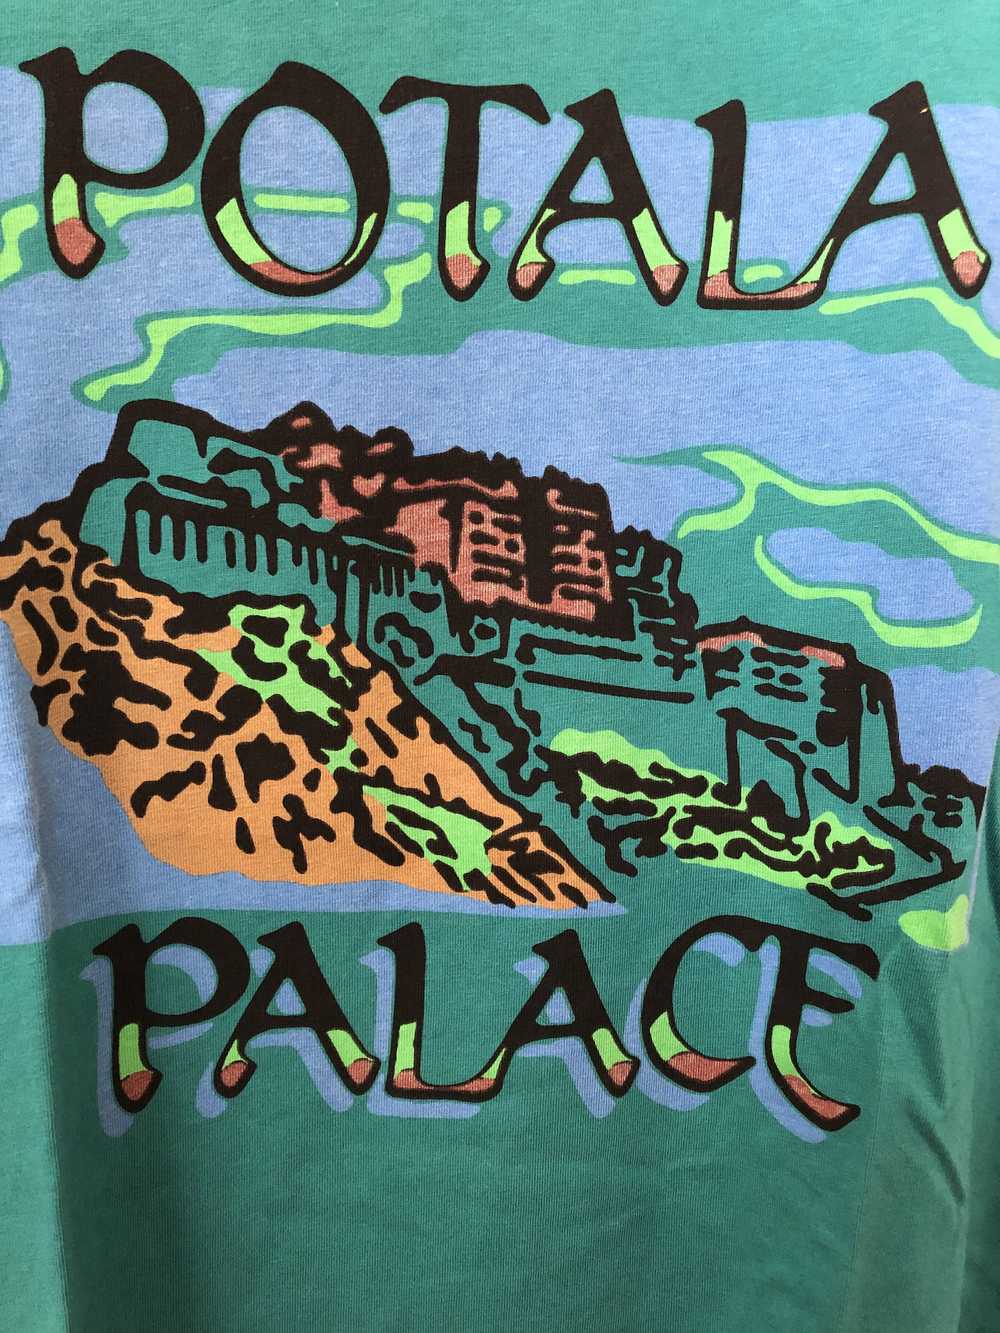 Palace Potala Palace Tee - image 3